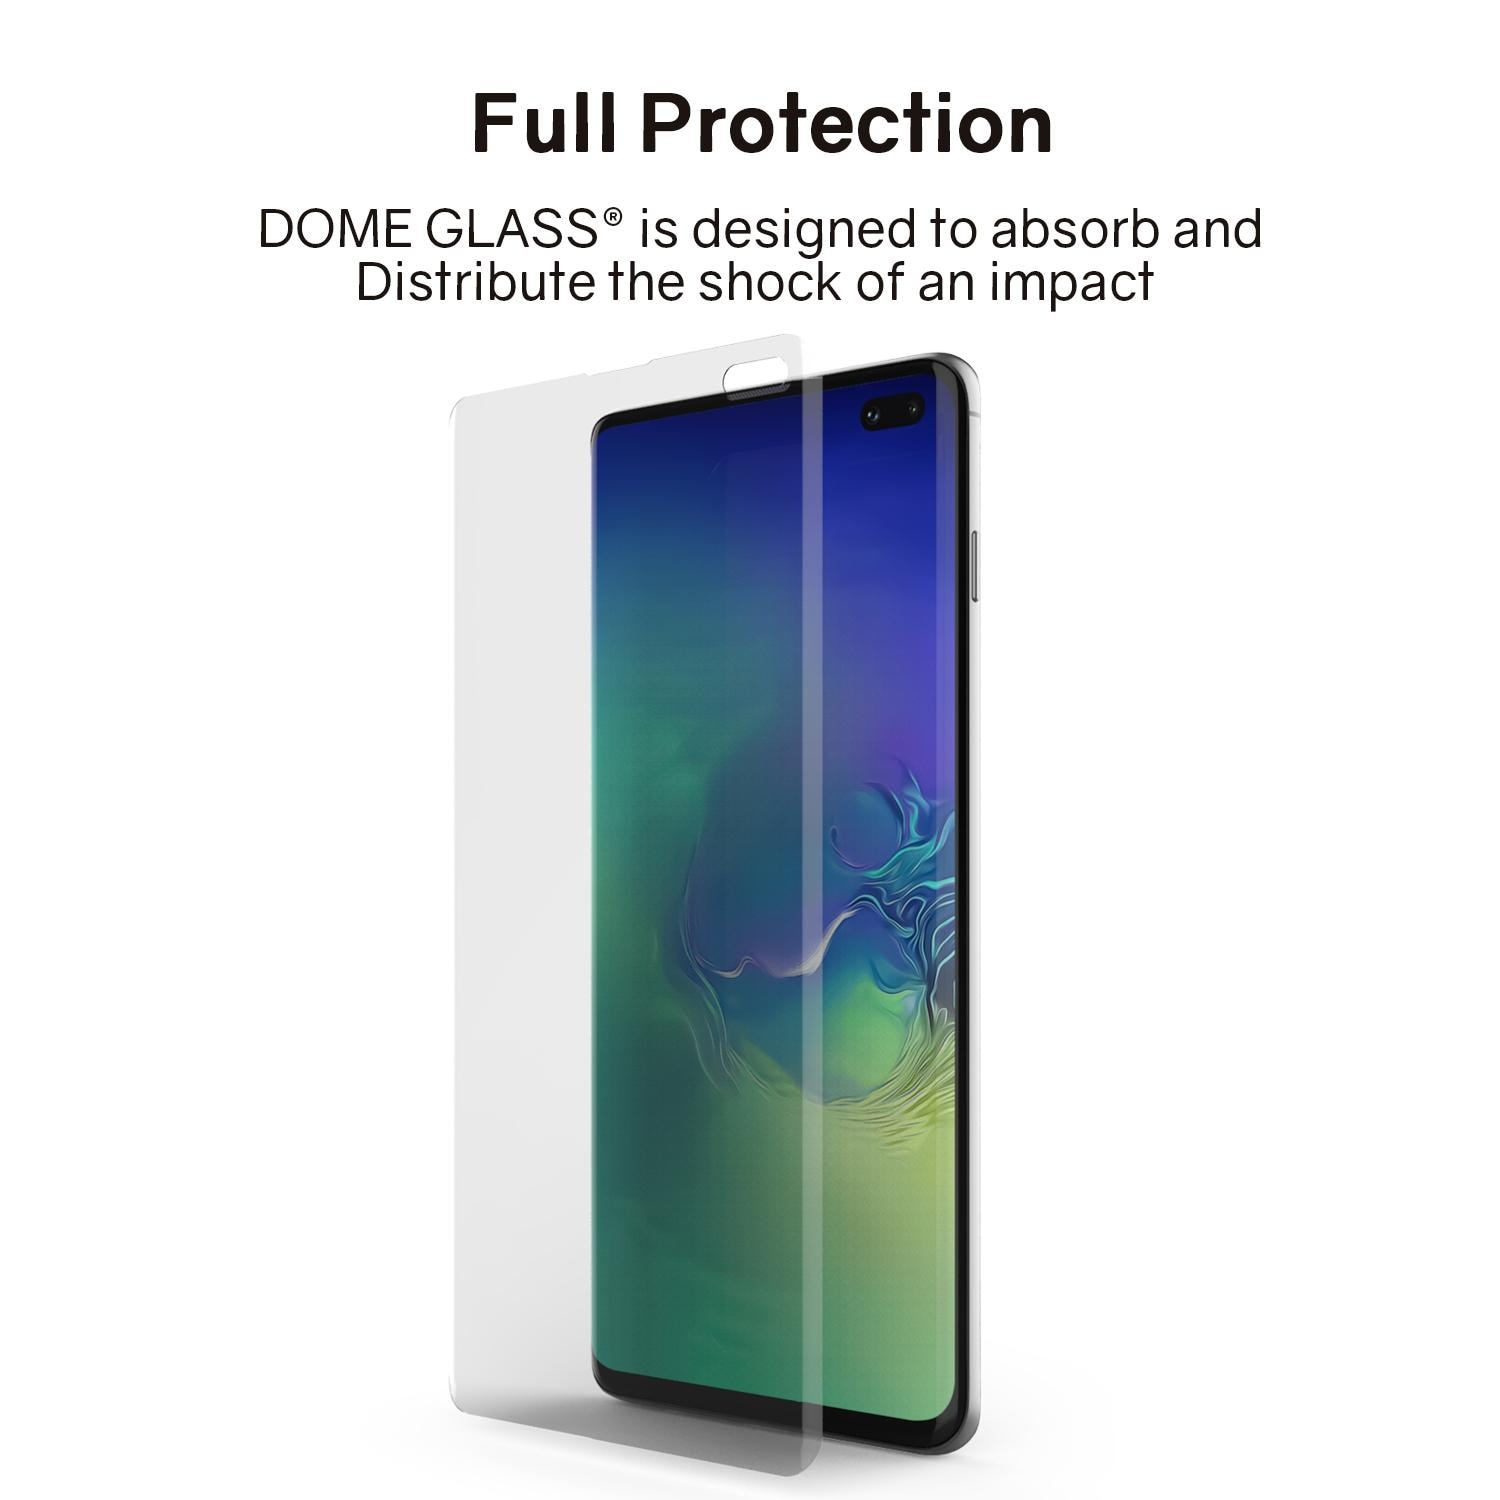 Dome Glass Screen Protector Galaxy S10 Plus